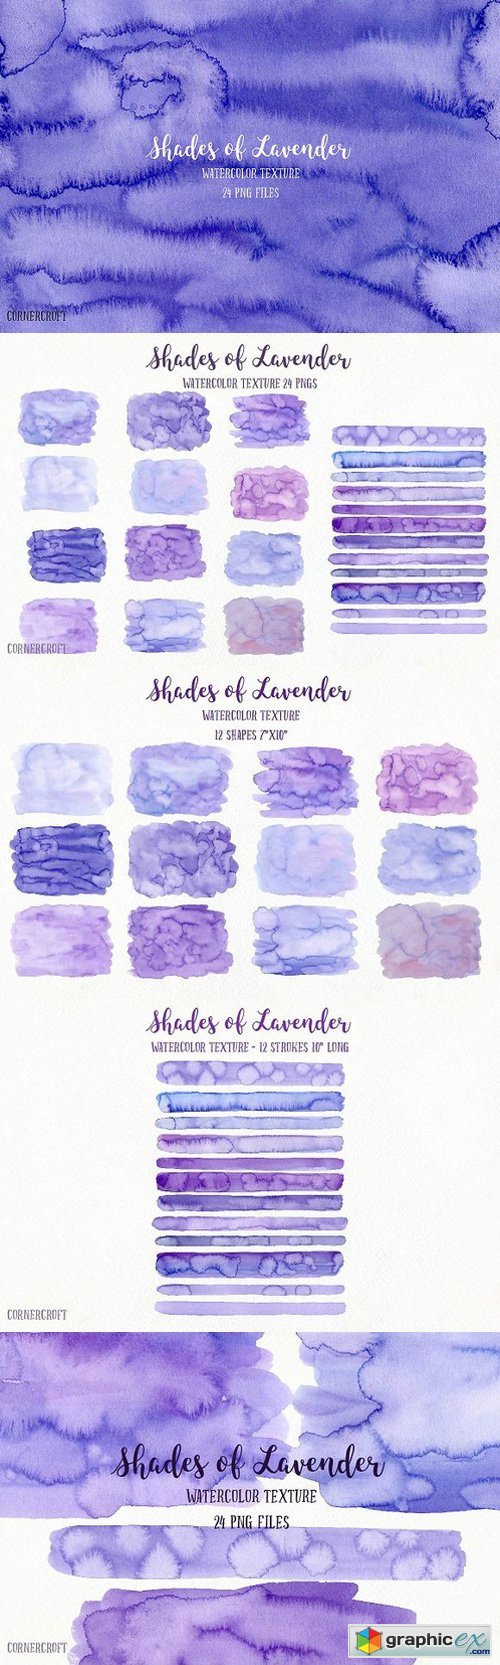 Watercolor Texture Lavender Shades